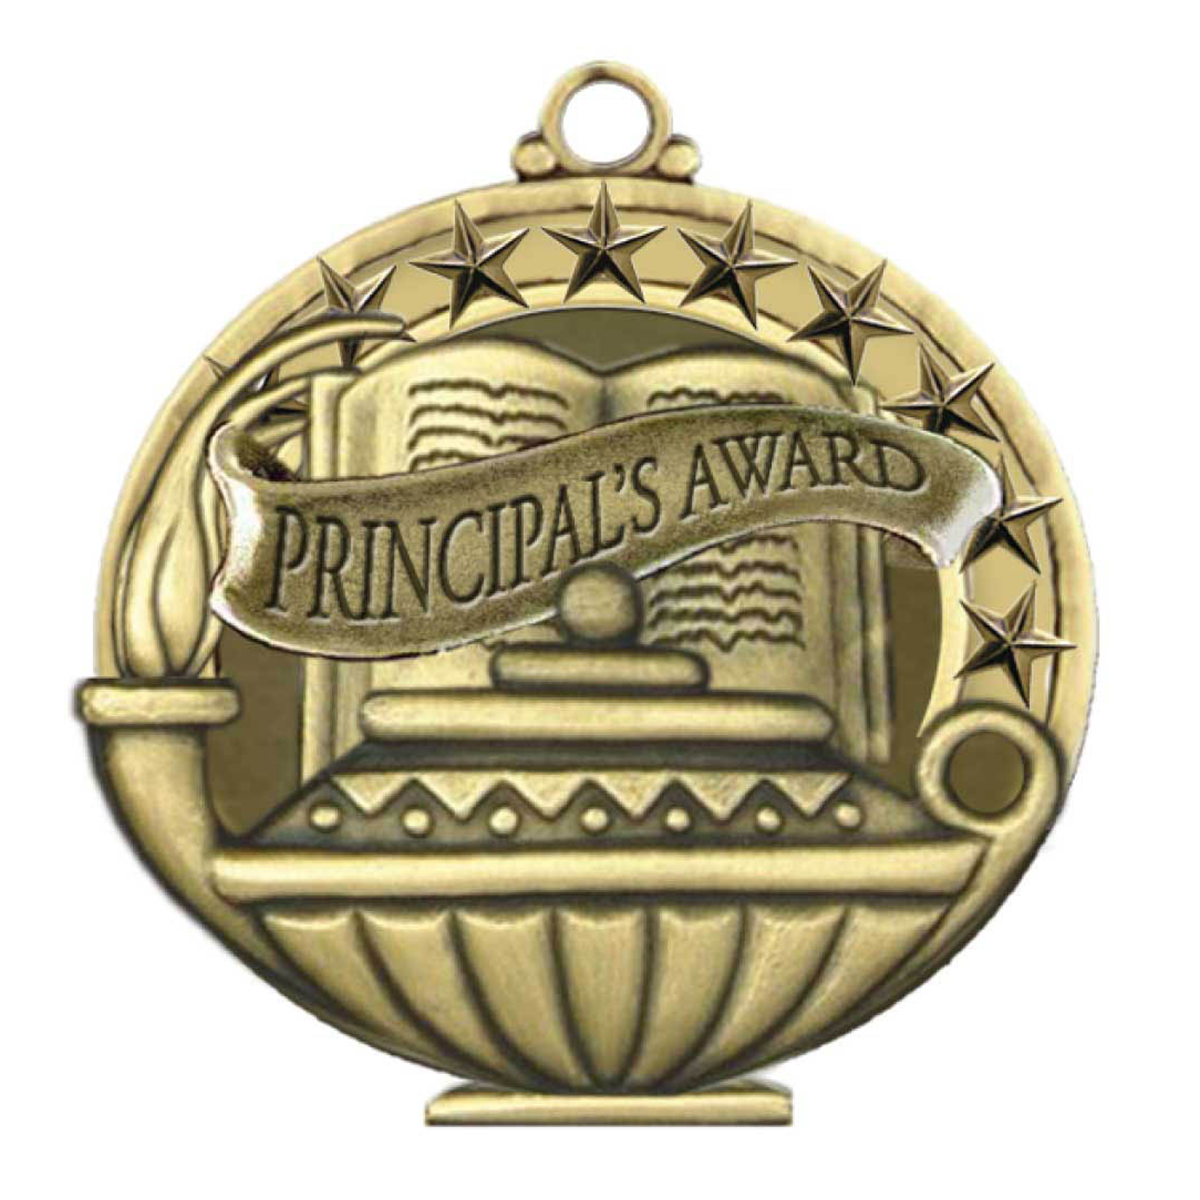 Principal’s Award Academic Performance Medallion